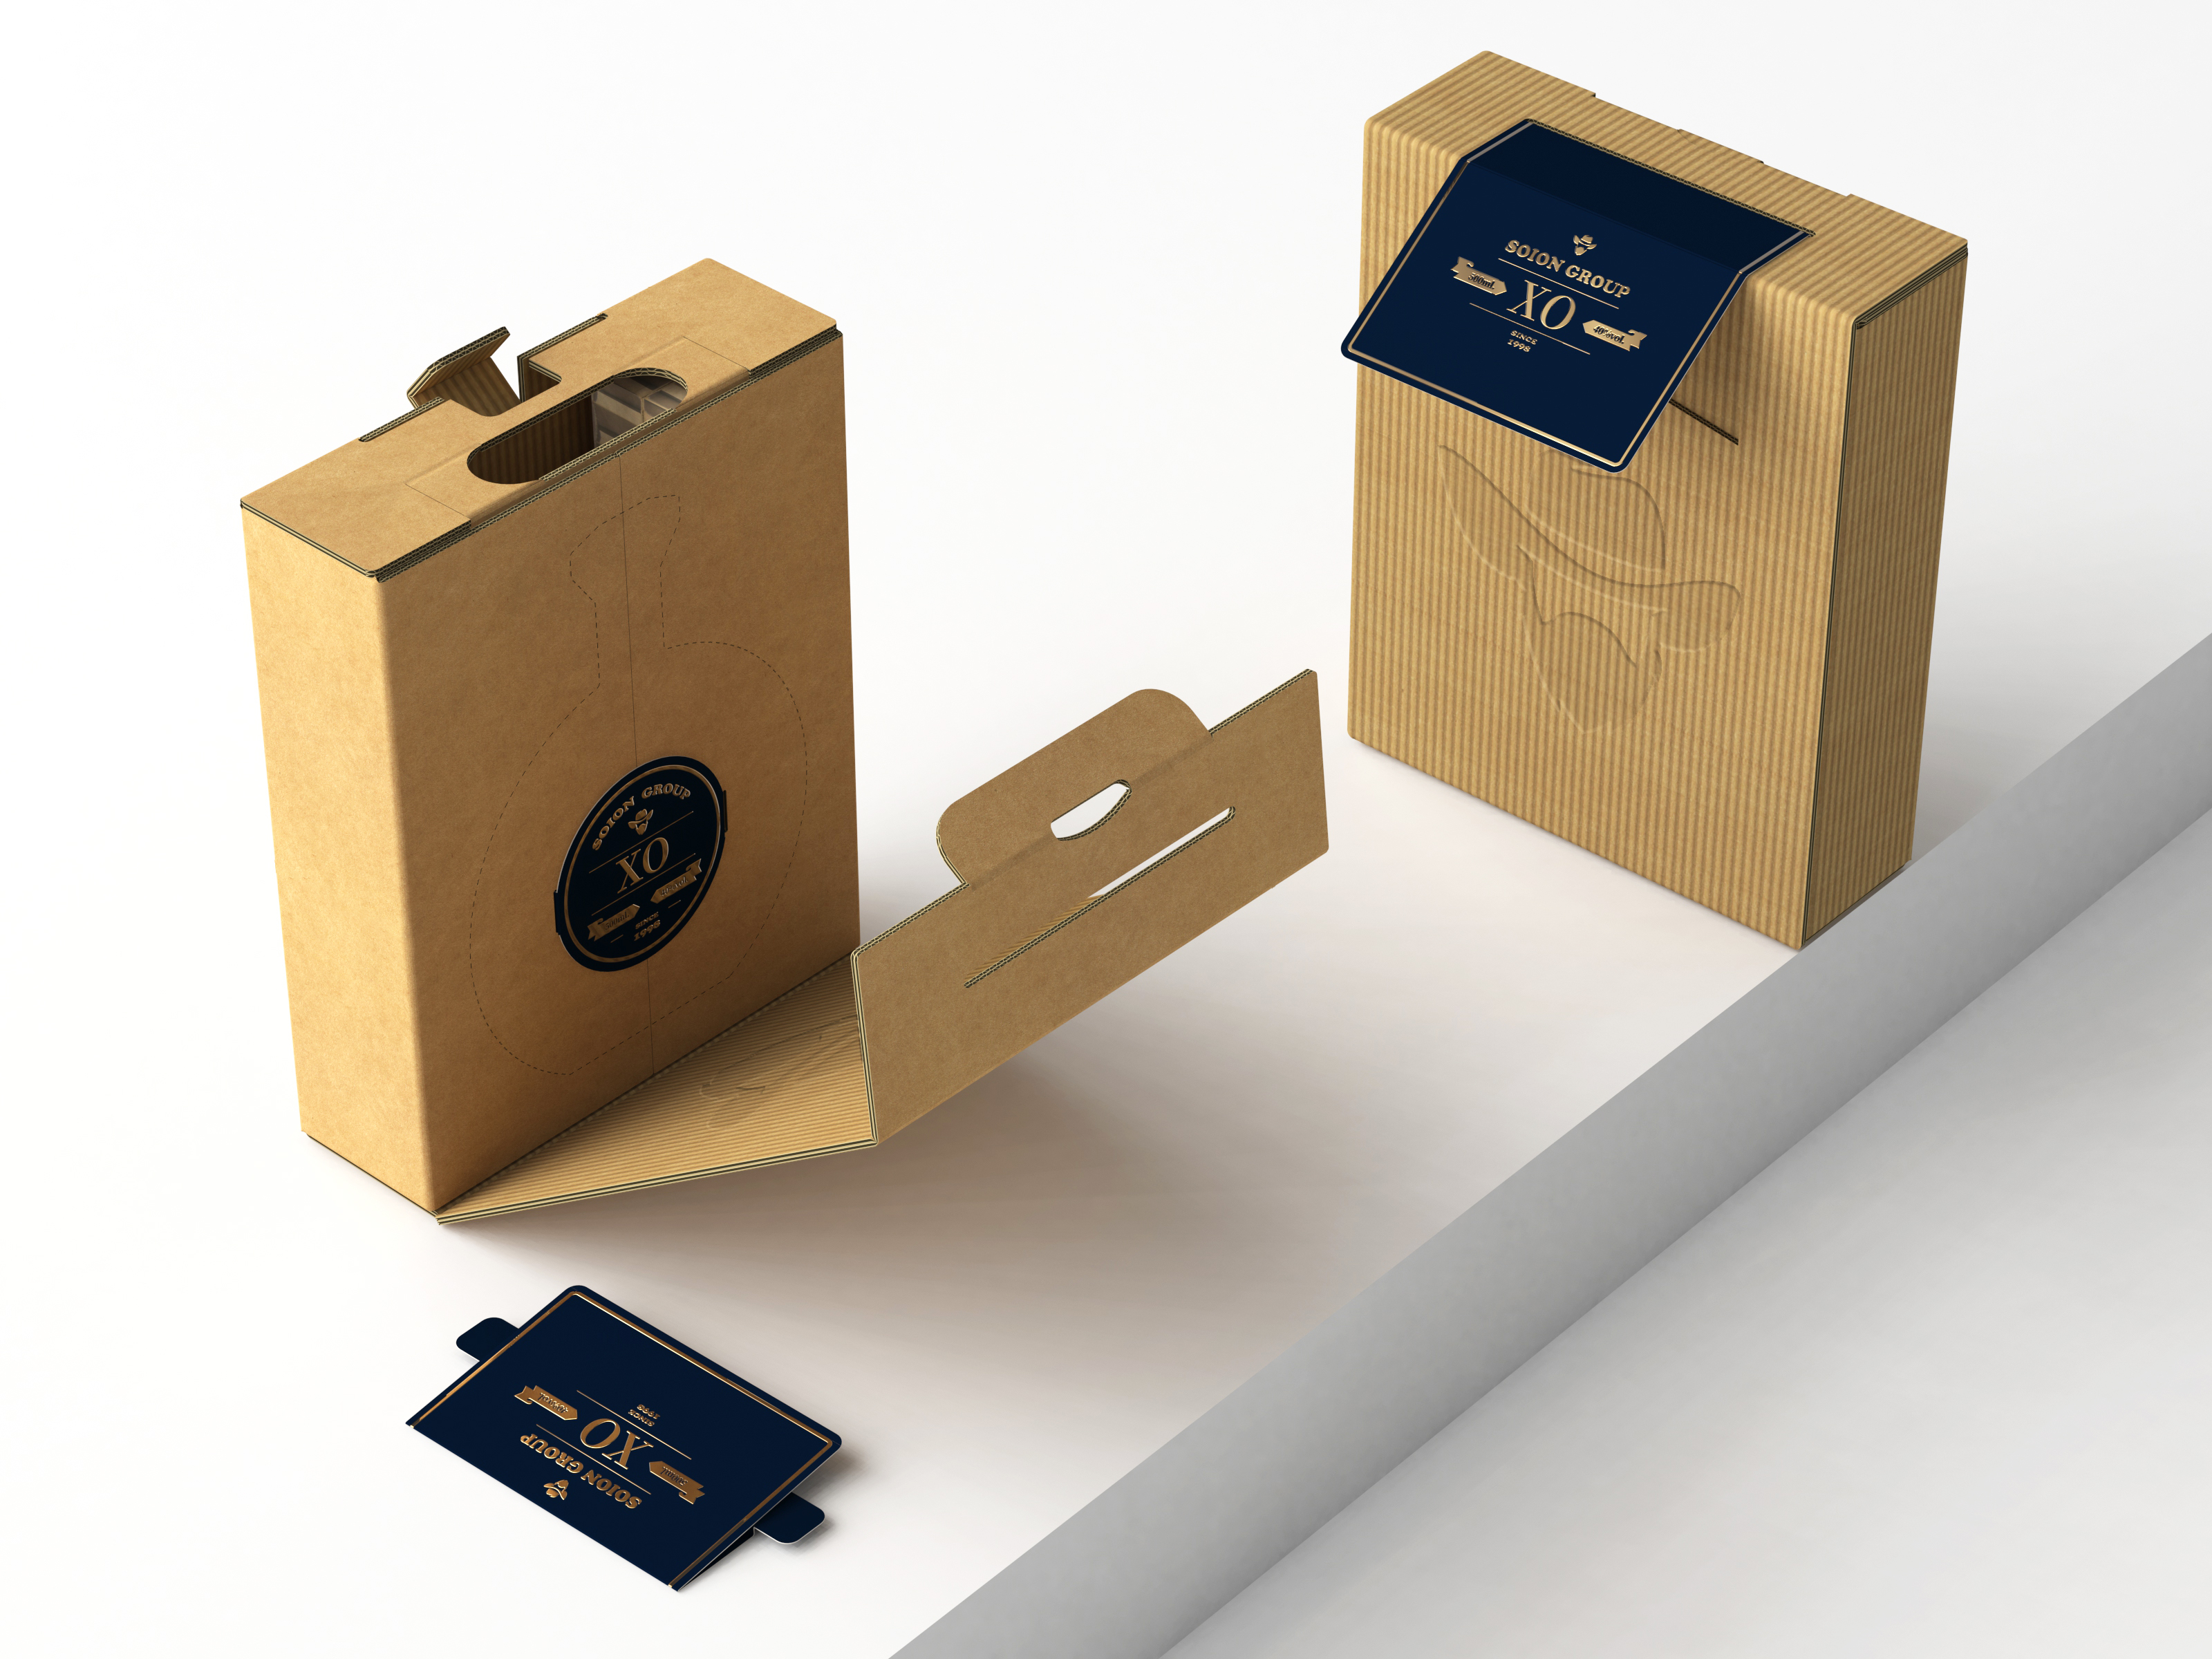 Three-in-one XO Brandy Packaging